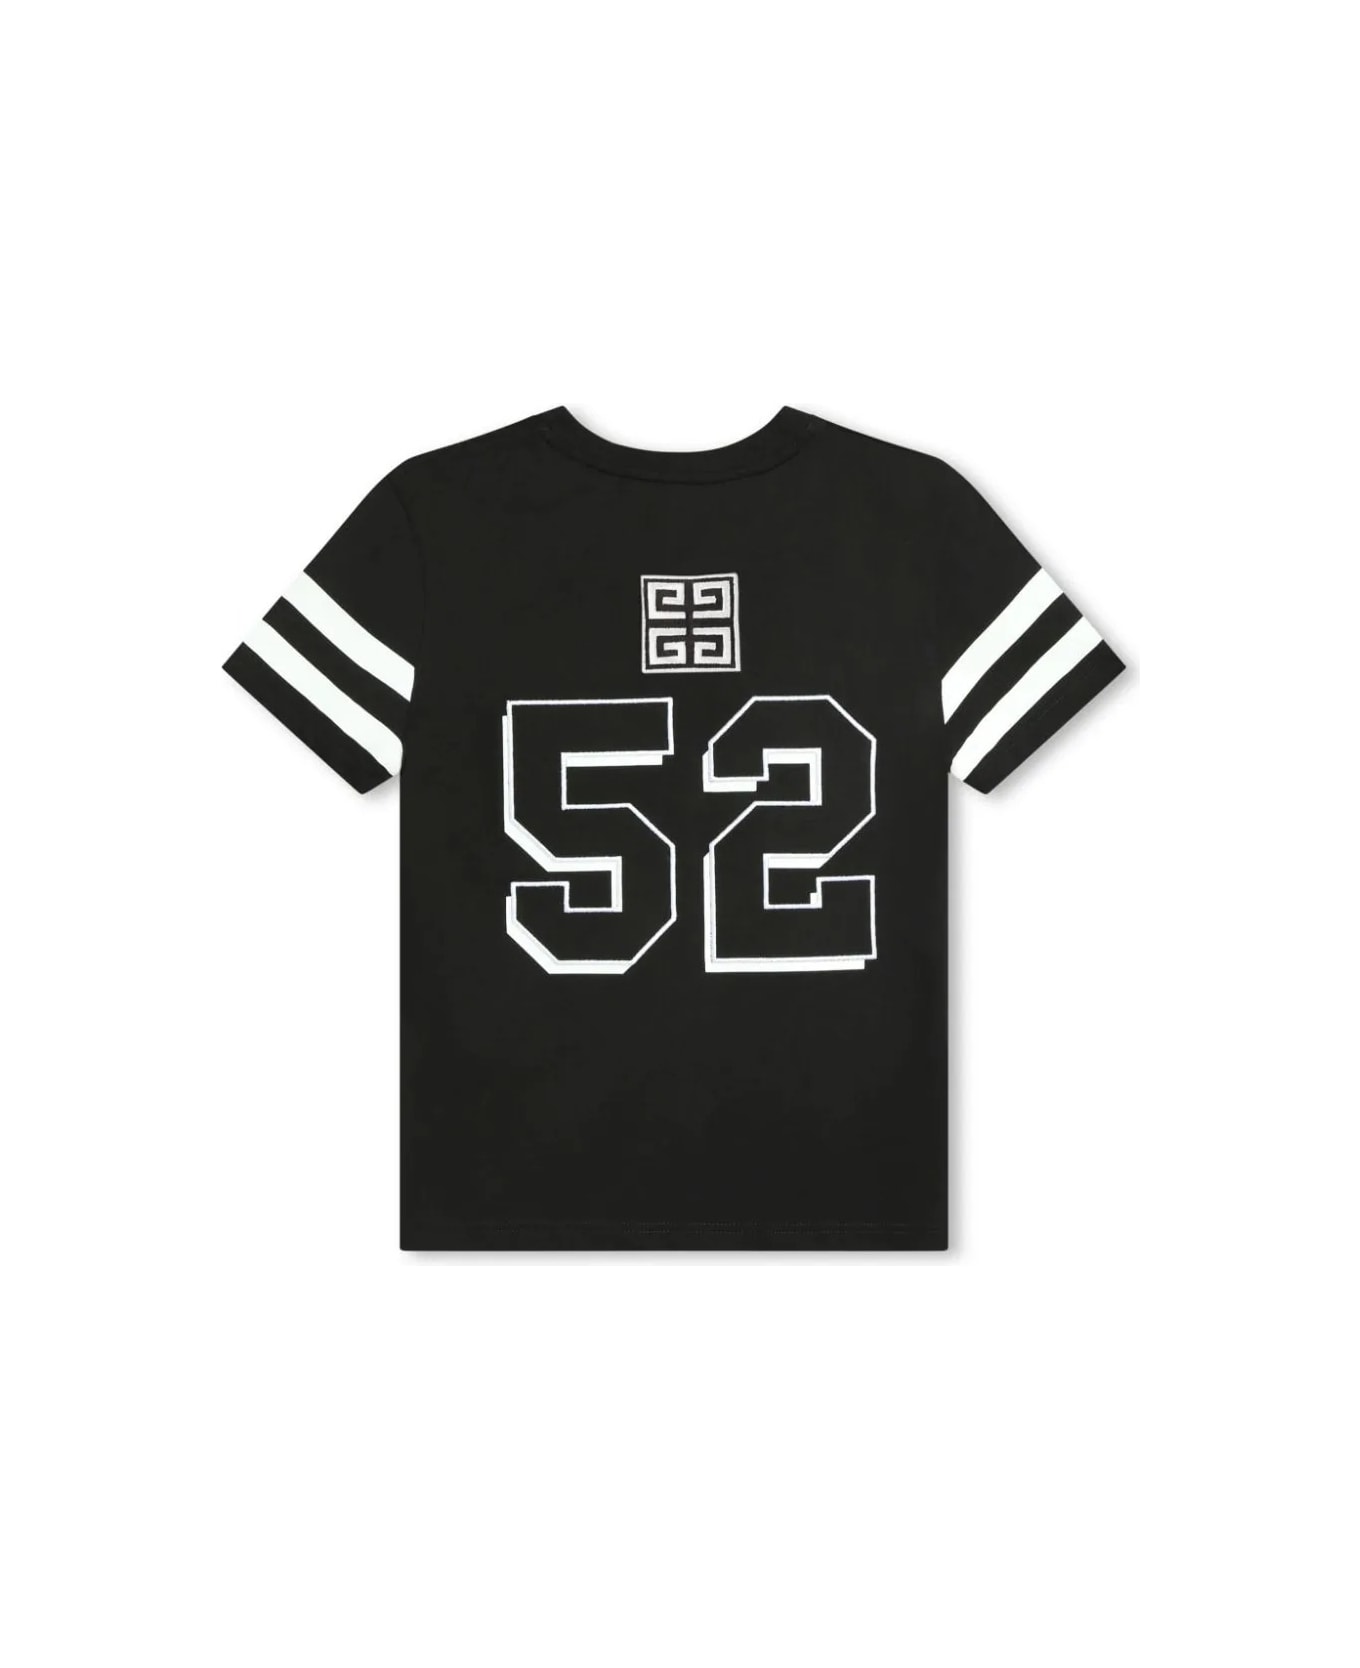 Givenchy Black Givenchy 4g 1952 T-shirt - Black Tシャツ＆ポロシャツ